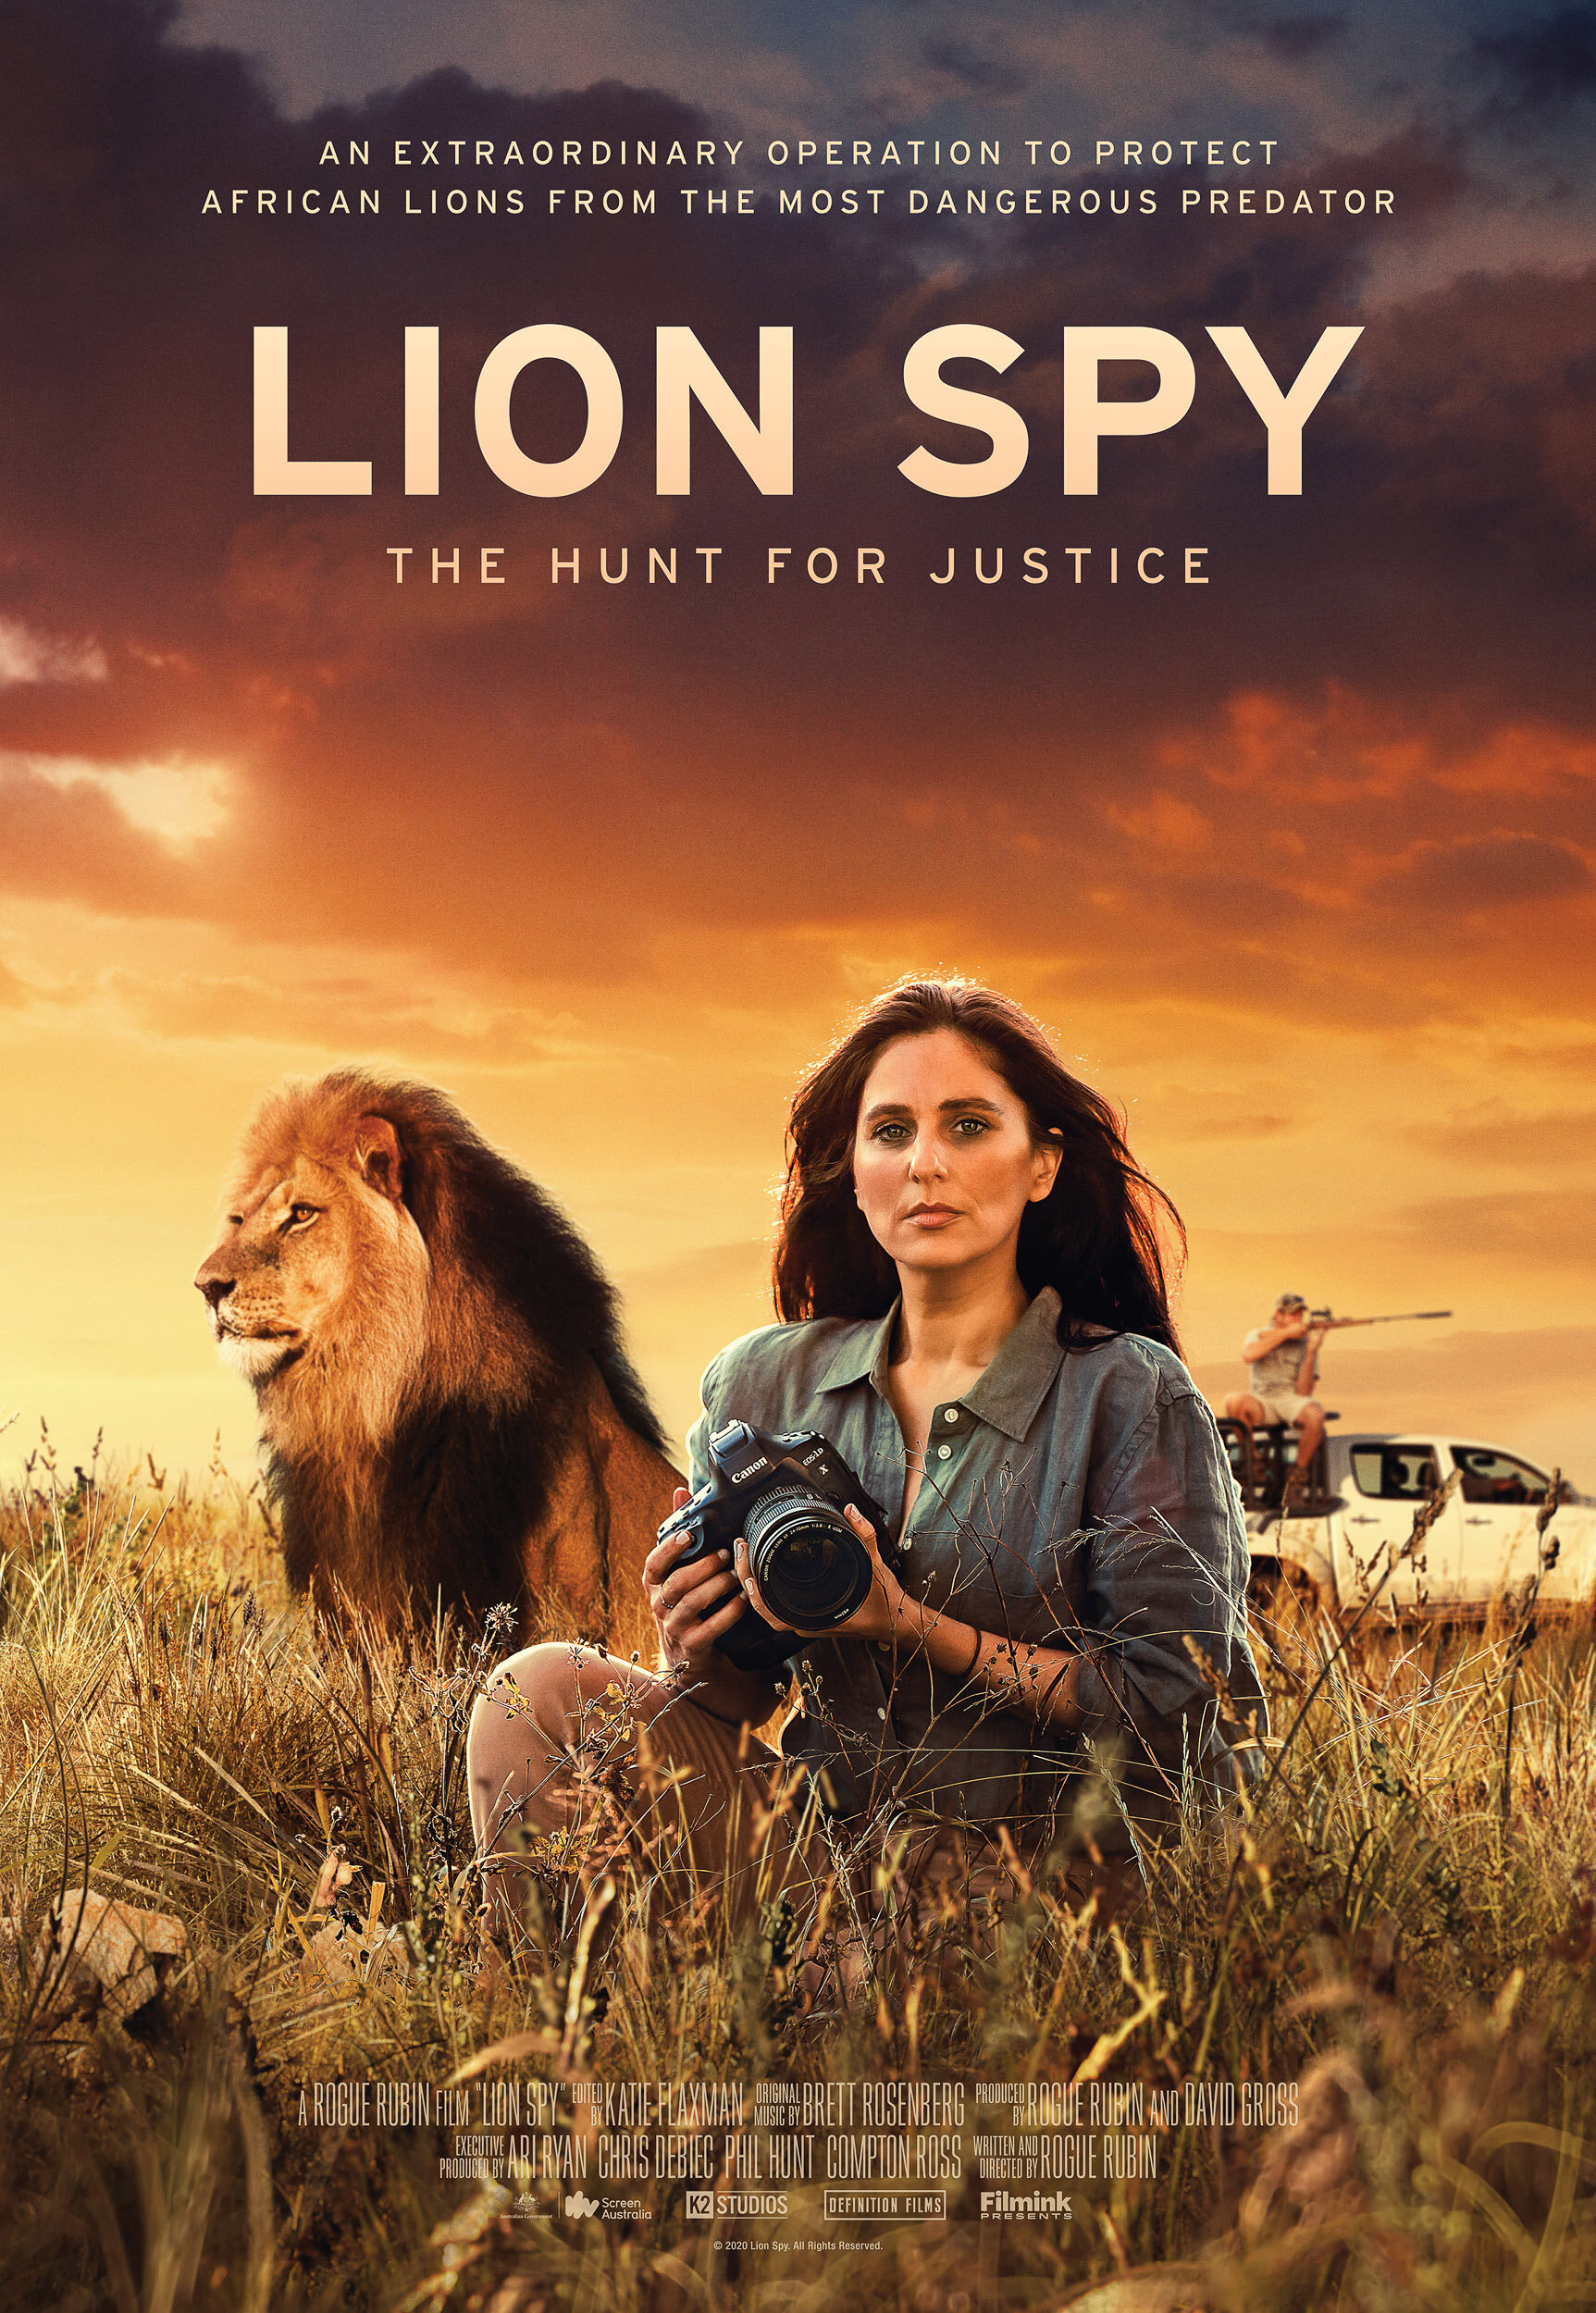 Lion Spy movie poster - design by Carnival Studio